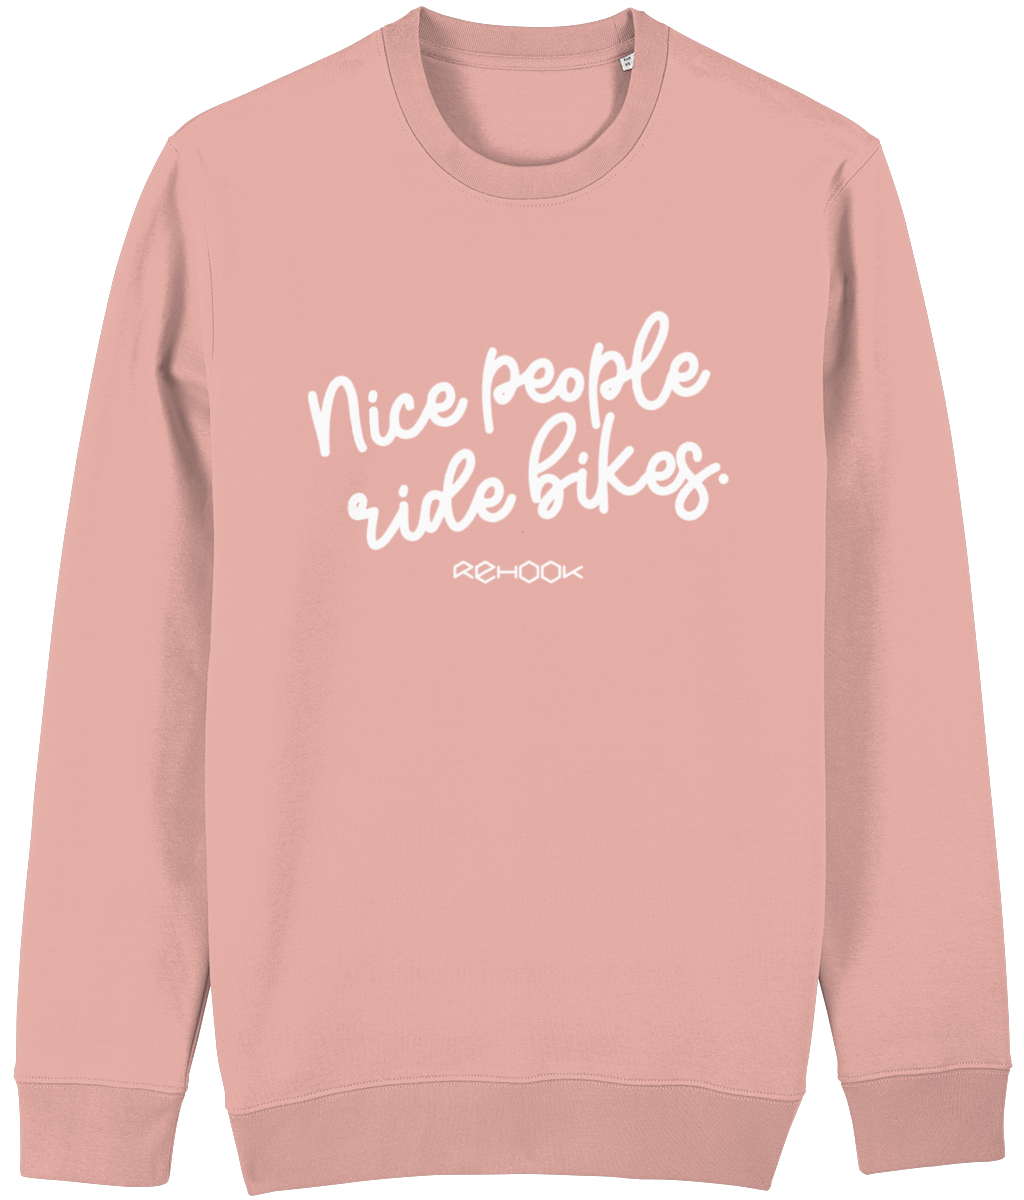 Rehook Nice People Ride Bikes Men's Post-Ride Sweatshirt